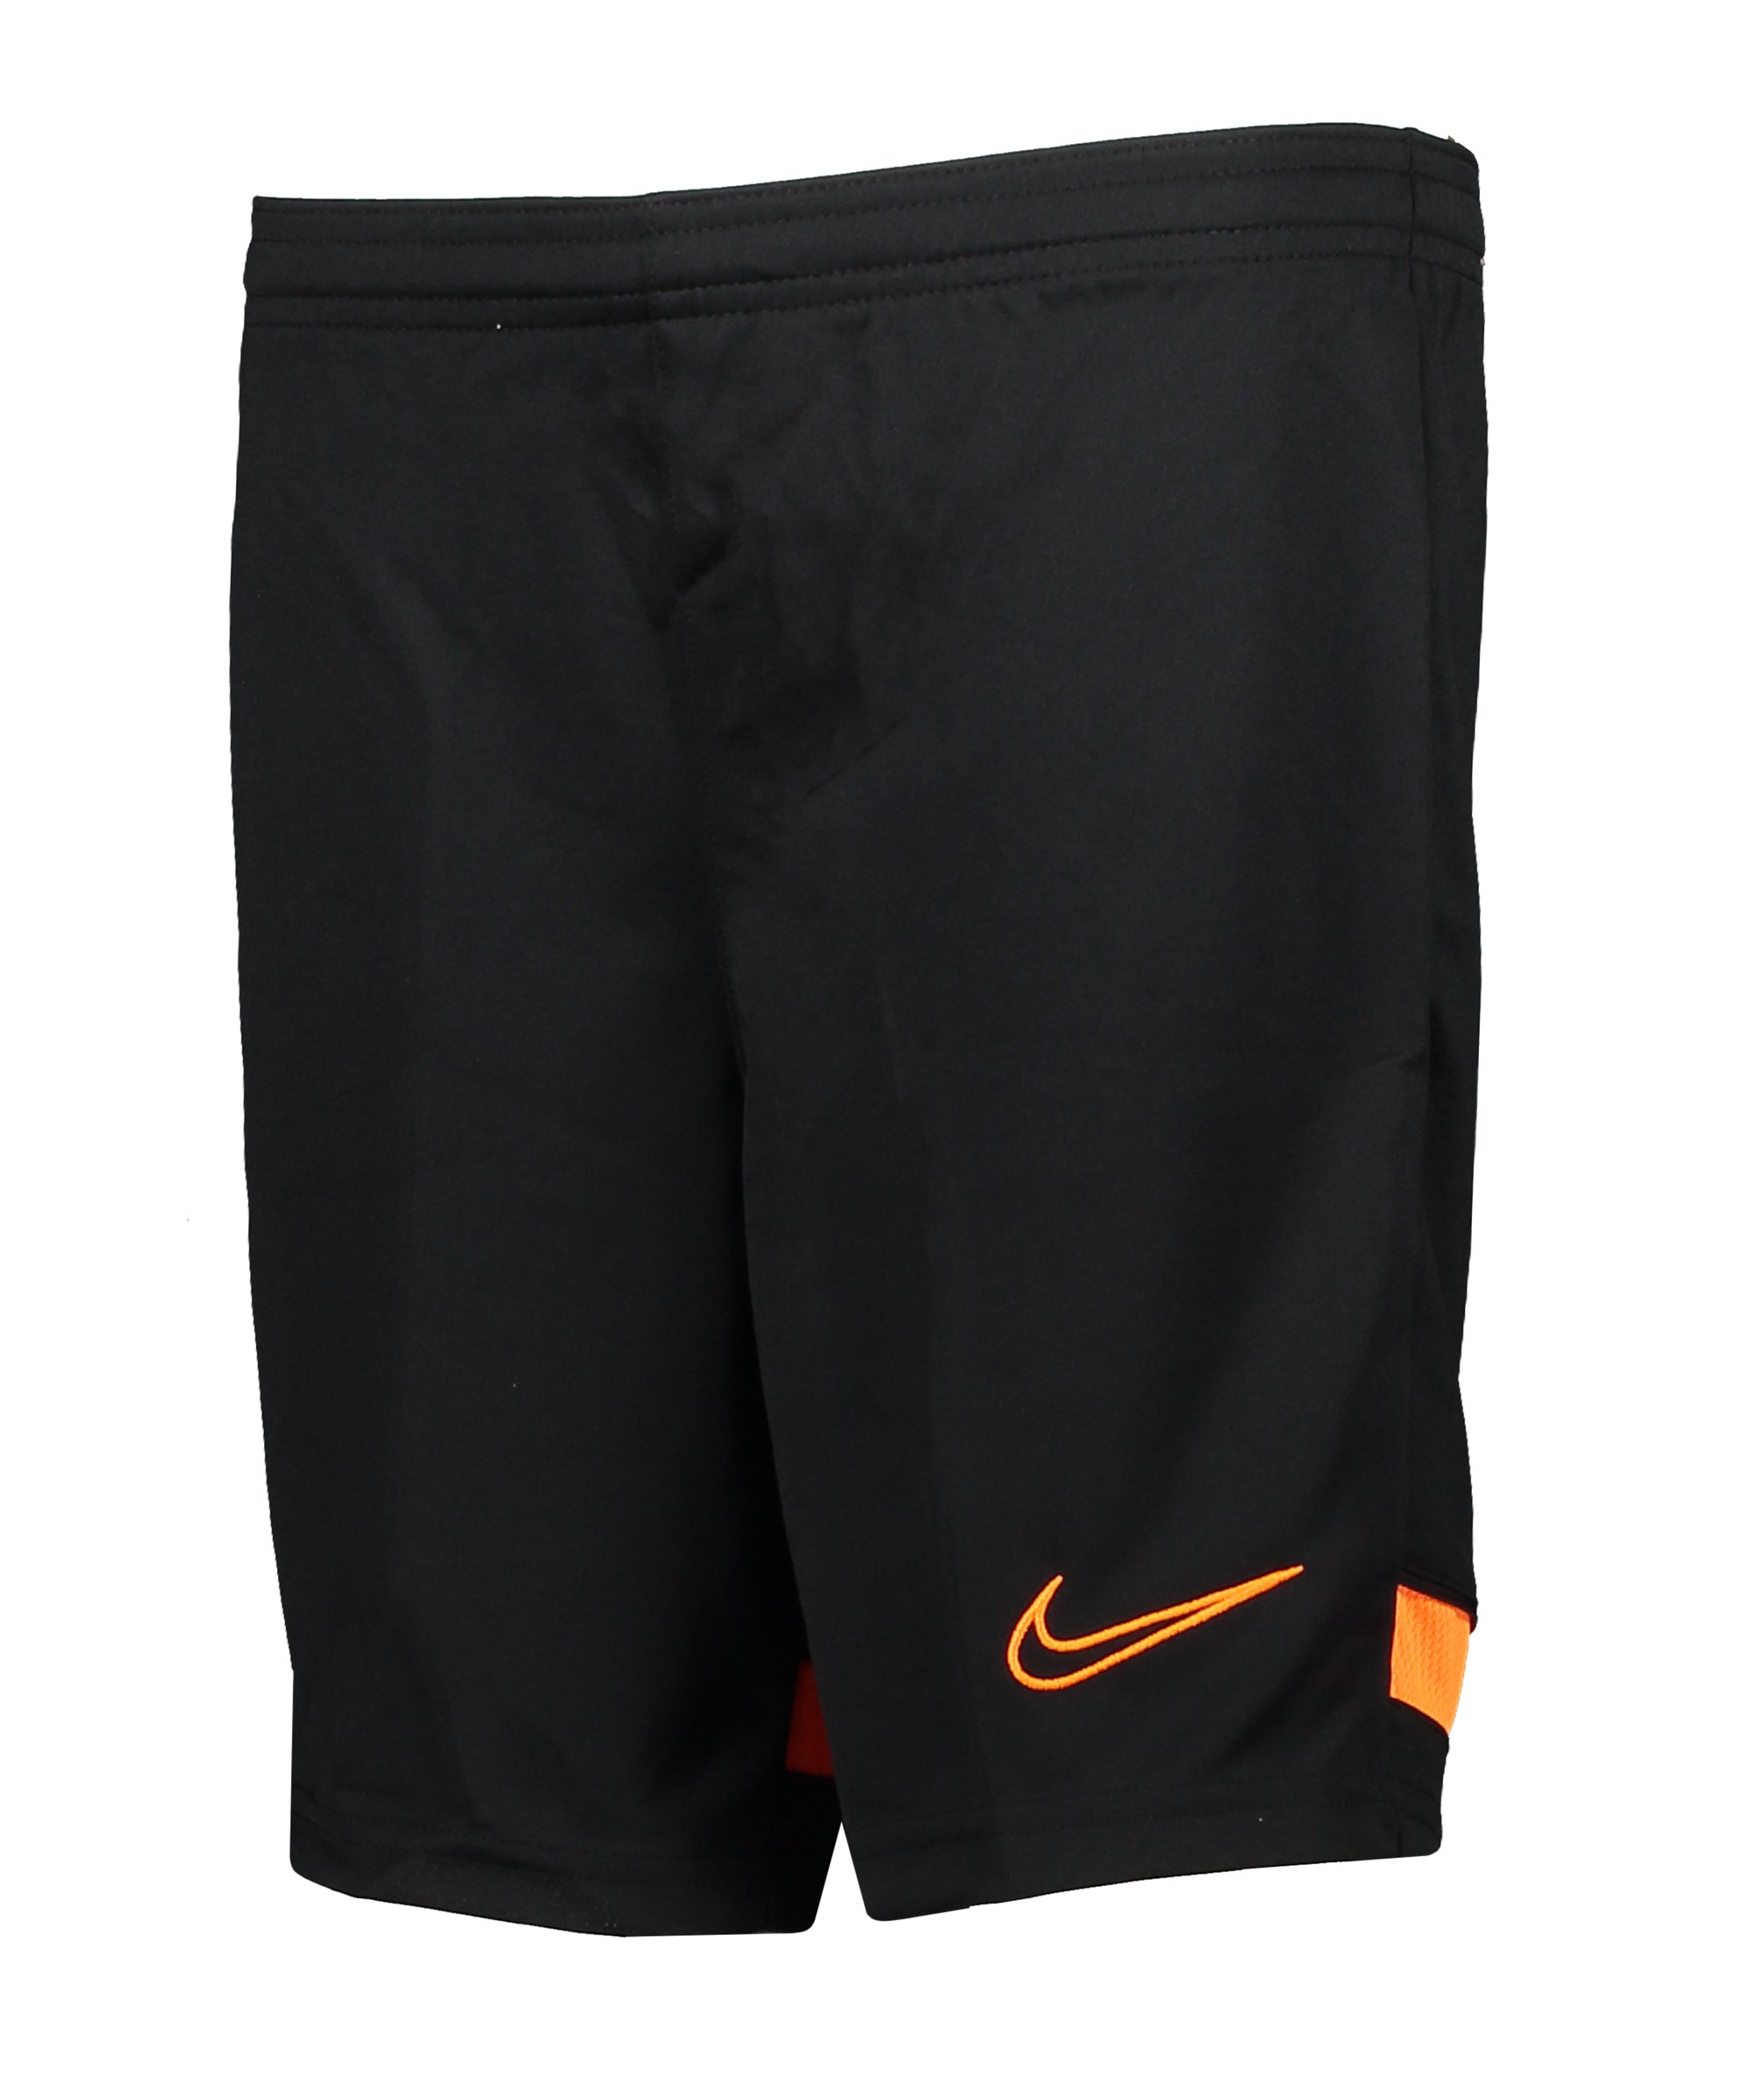 Nike Academy 21 Short Kids Schwarz Orange F017 - schwarz